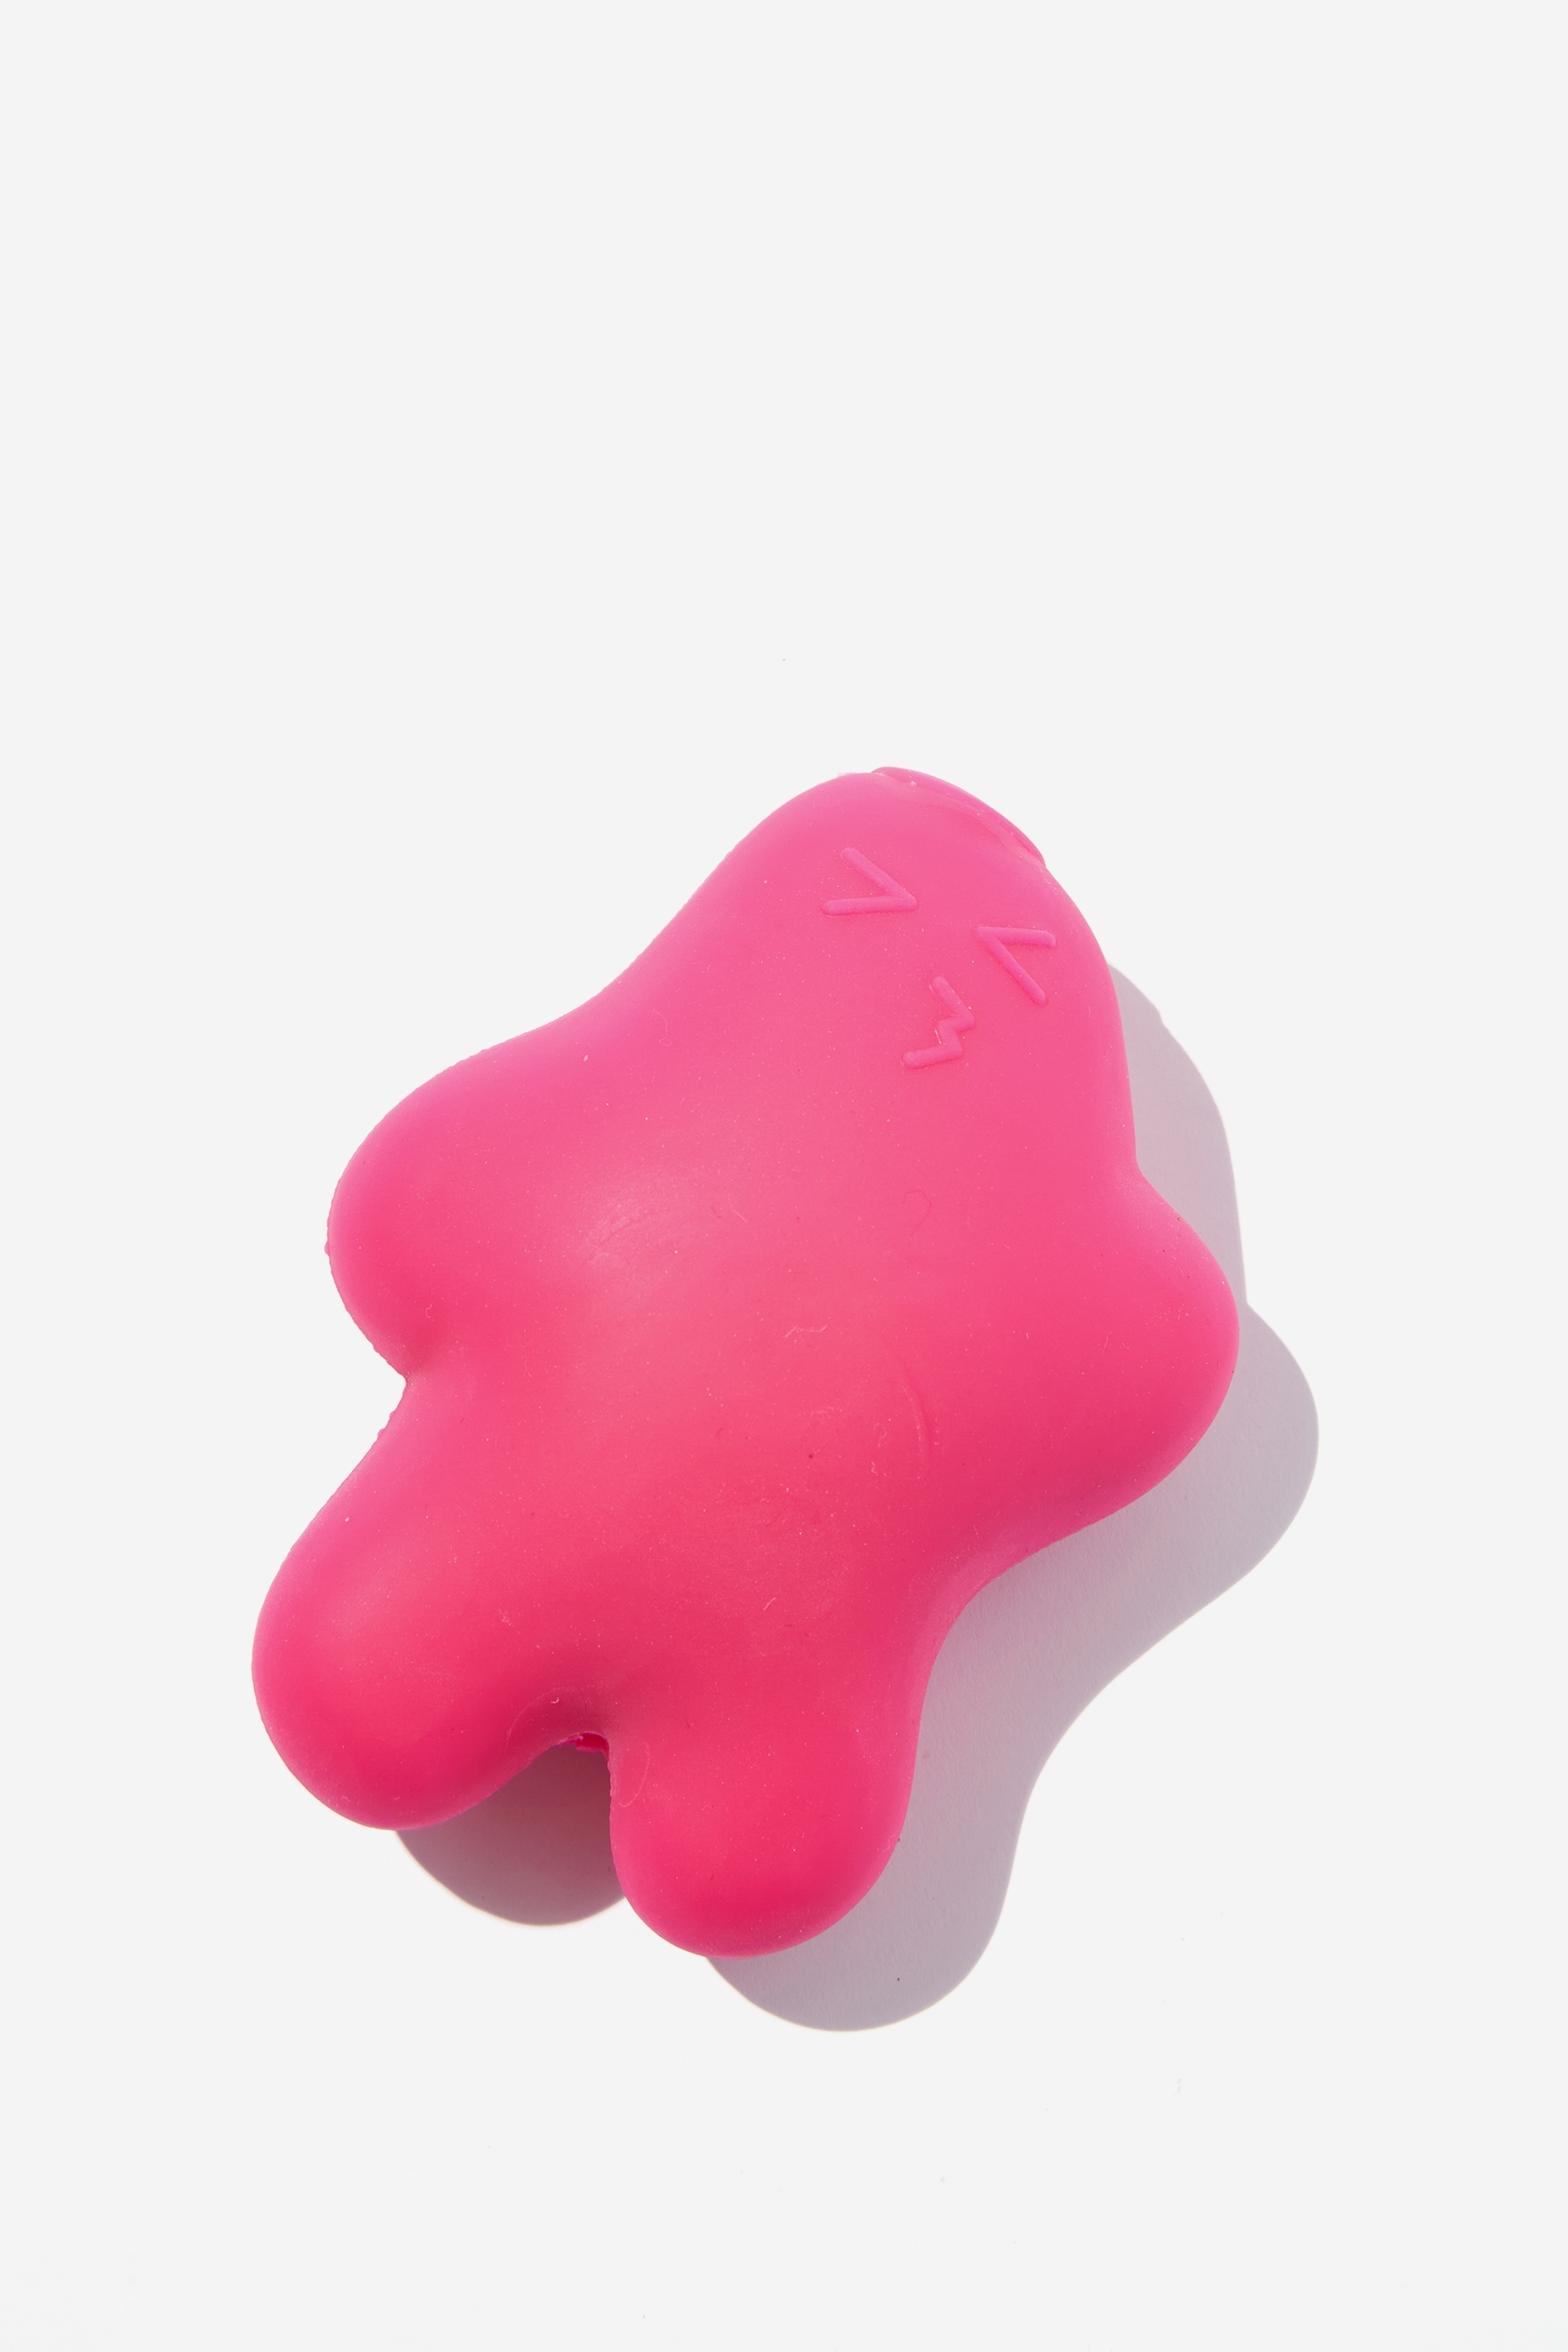 Typo - Adaptapals - Kissy sizzle pink